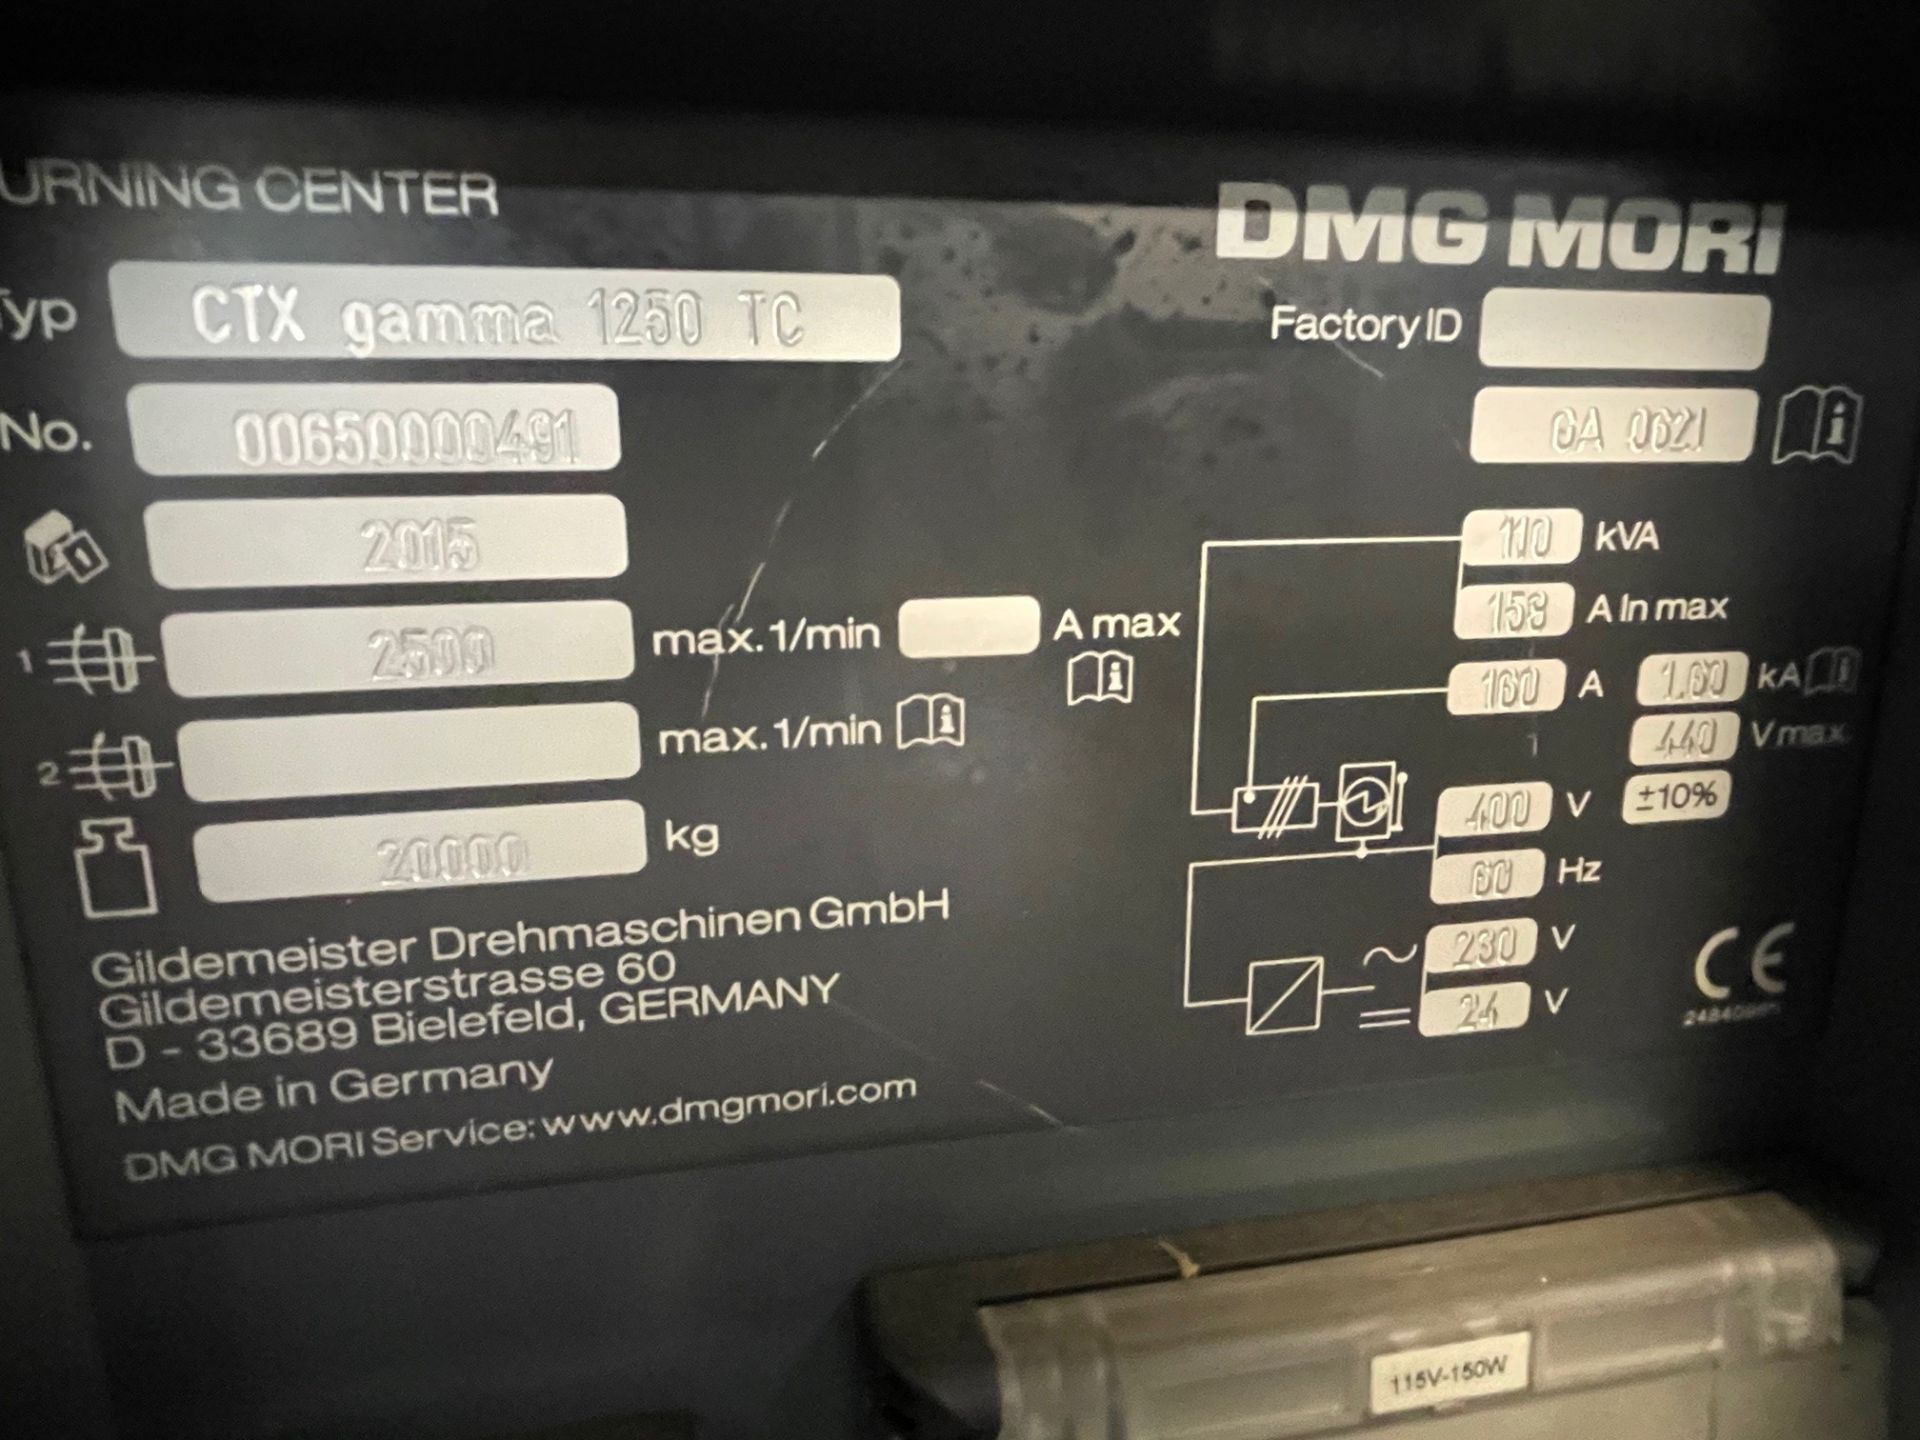 DMG Mori Gildemeister CTX Gamma 1250 TC CNC Turn & Mill Machining Center - New 2015 - Image 5 of 7